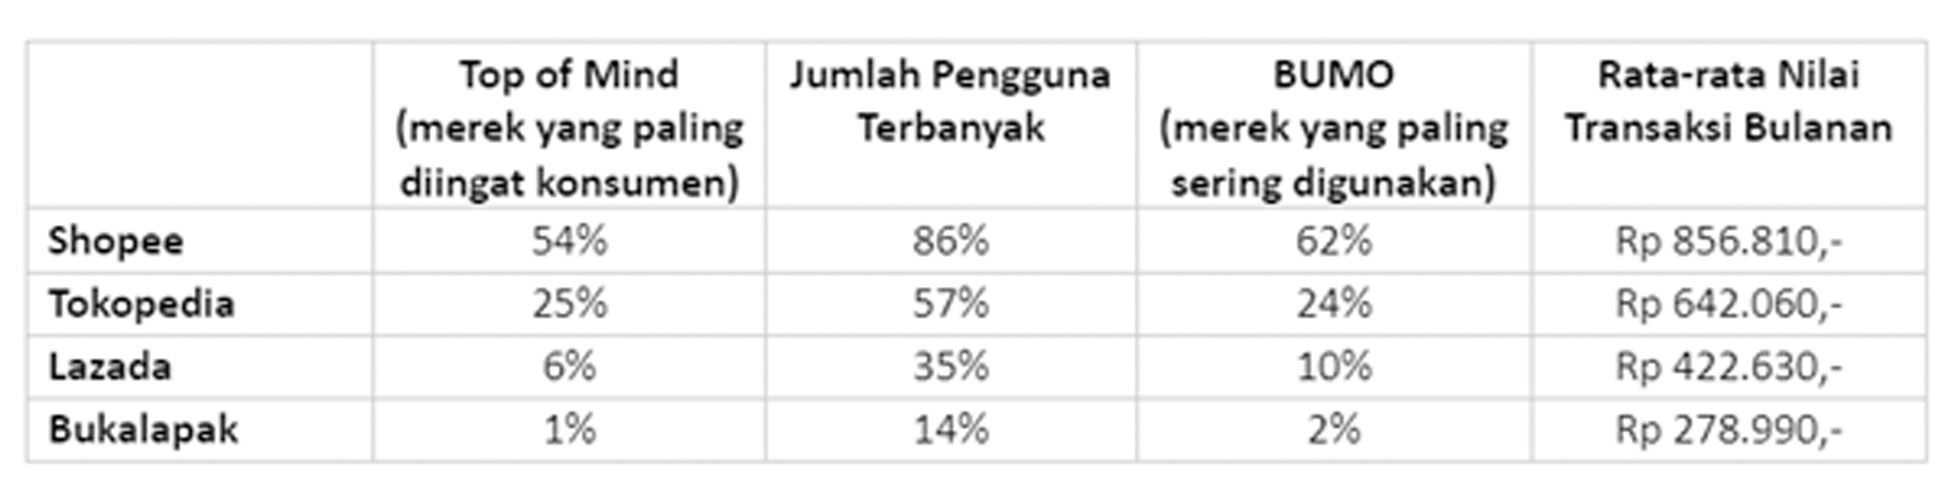 (Sumber: Kantar, Tabel Pangsa Pasar Pengguna E-Commerce di Indonesia)